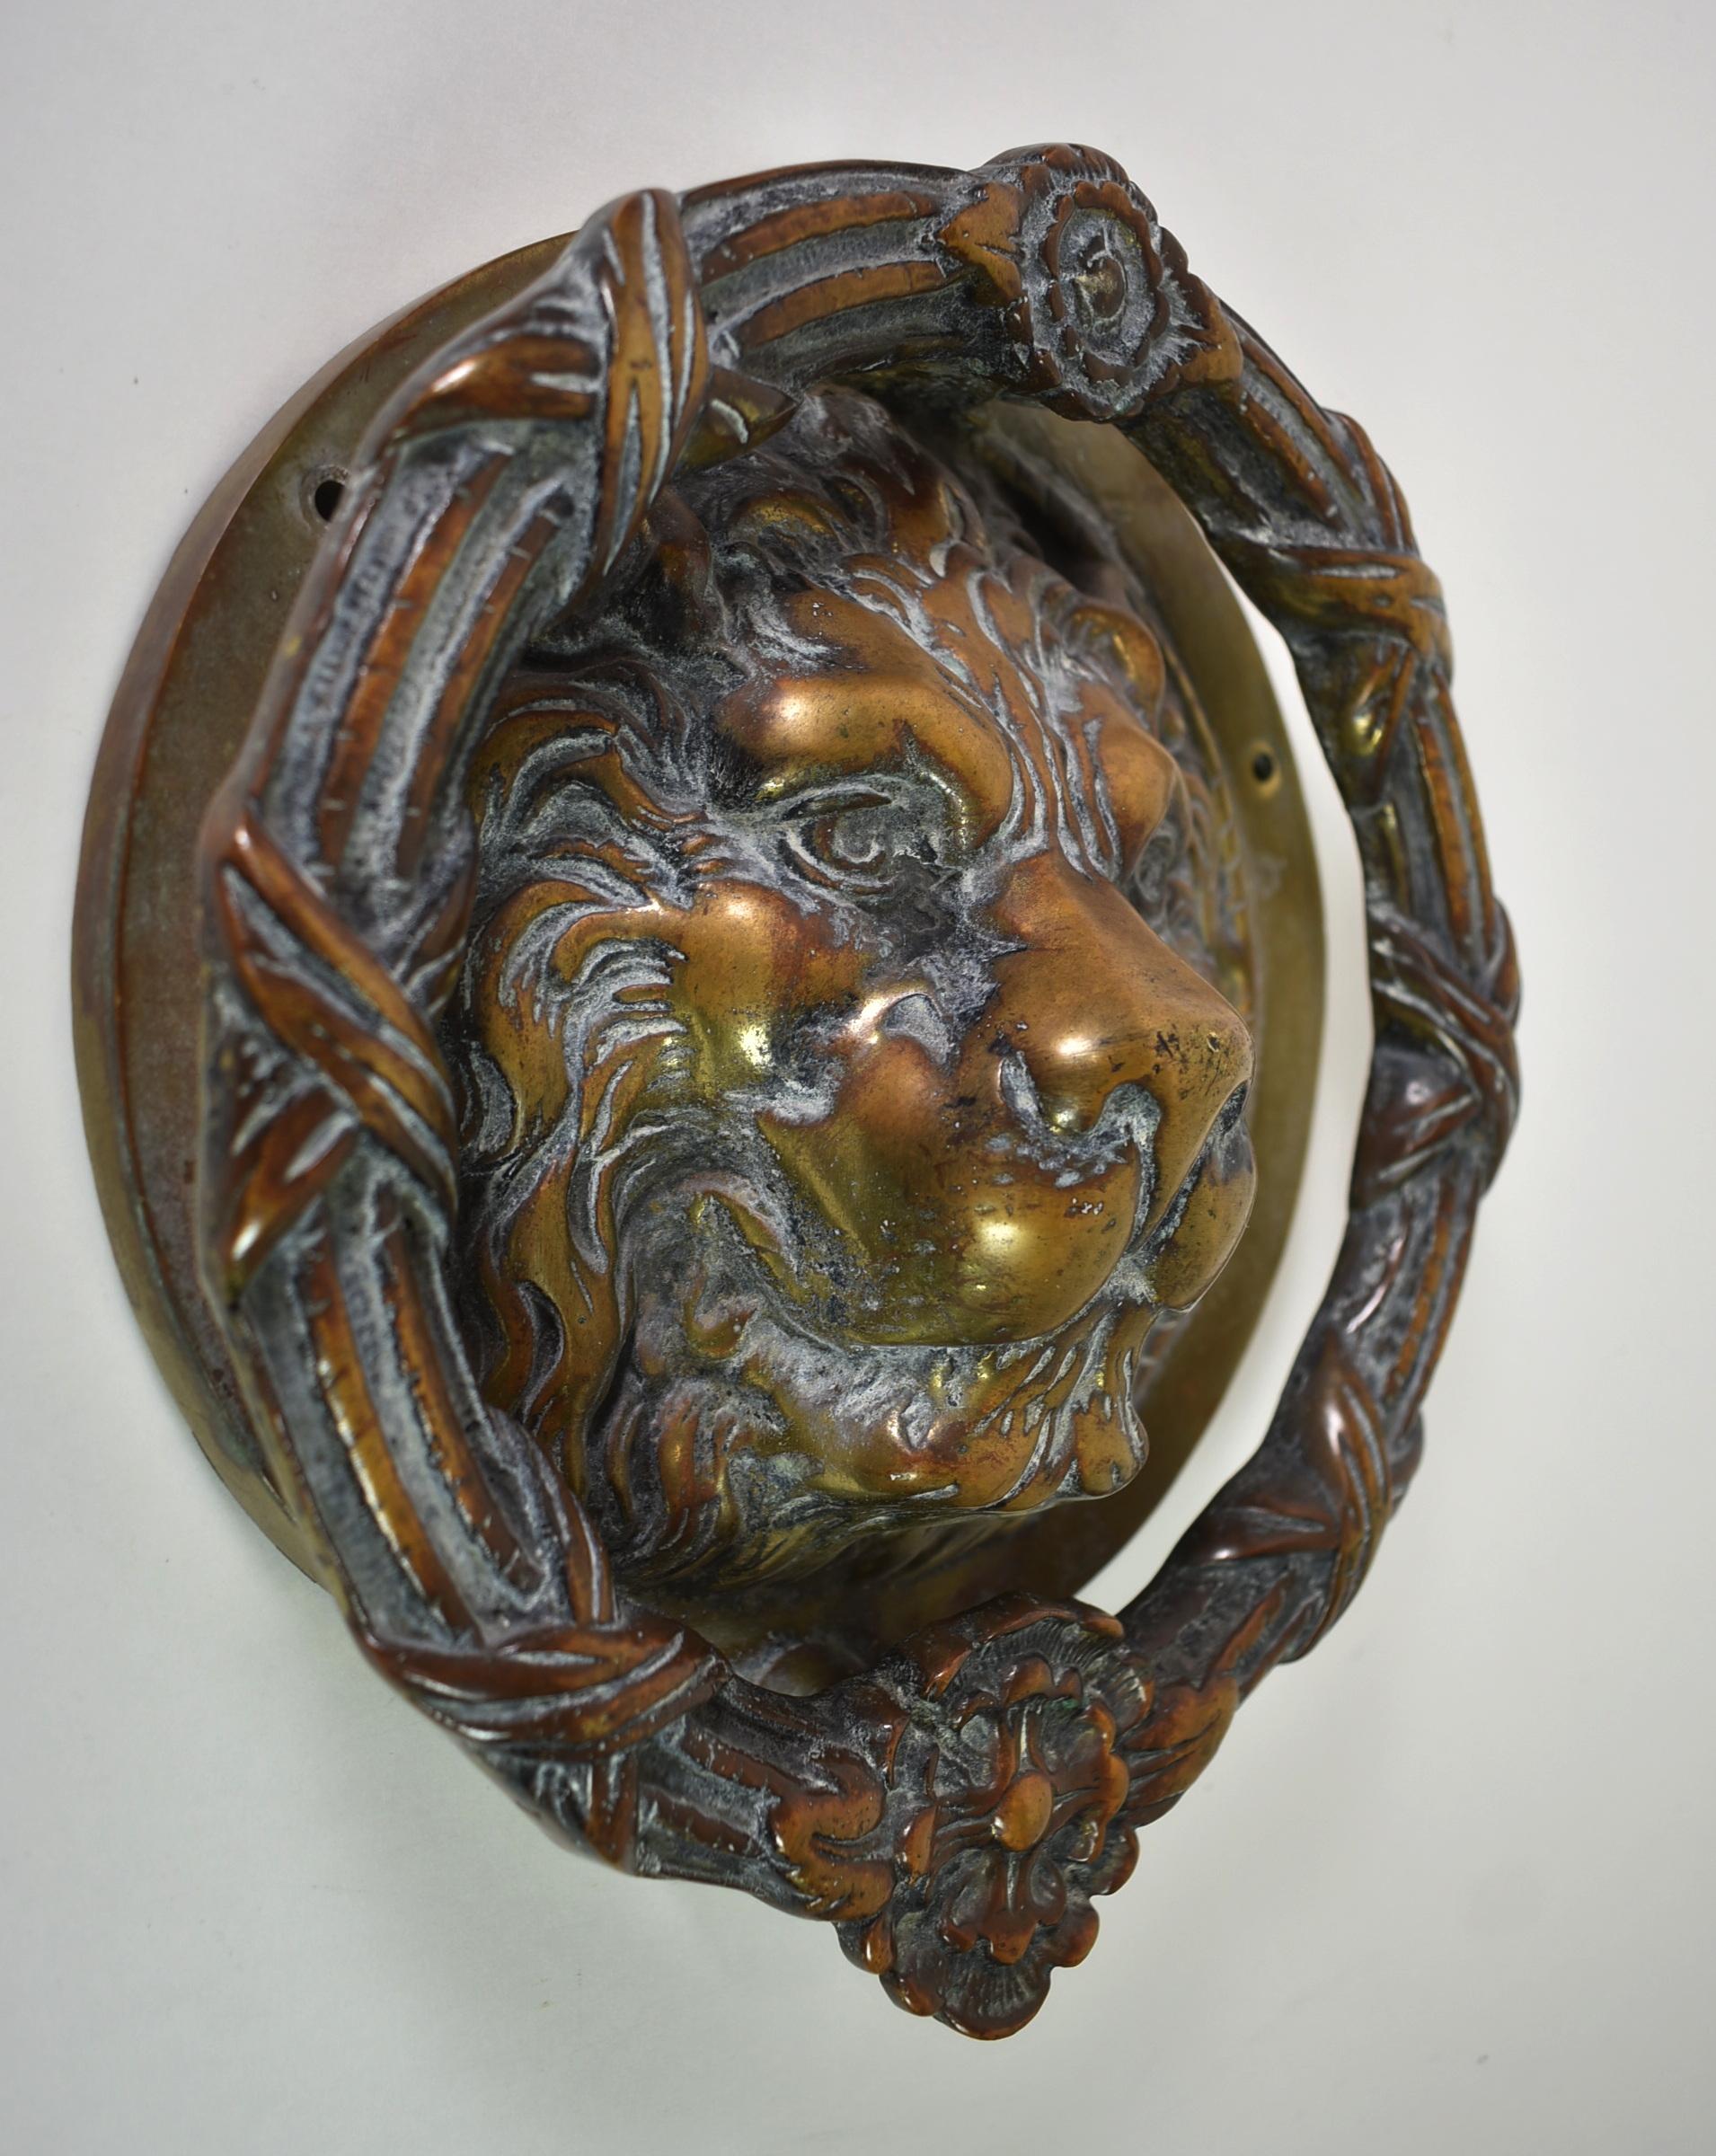 Vintage large scale cast brass lion head door knocker. Border has high relief floral wreath details. Back plate is 8.25